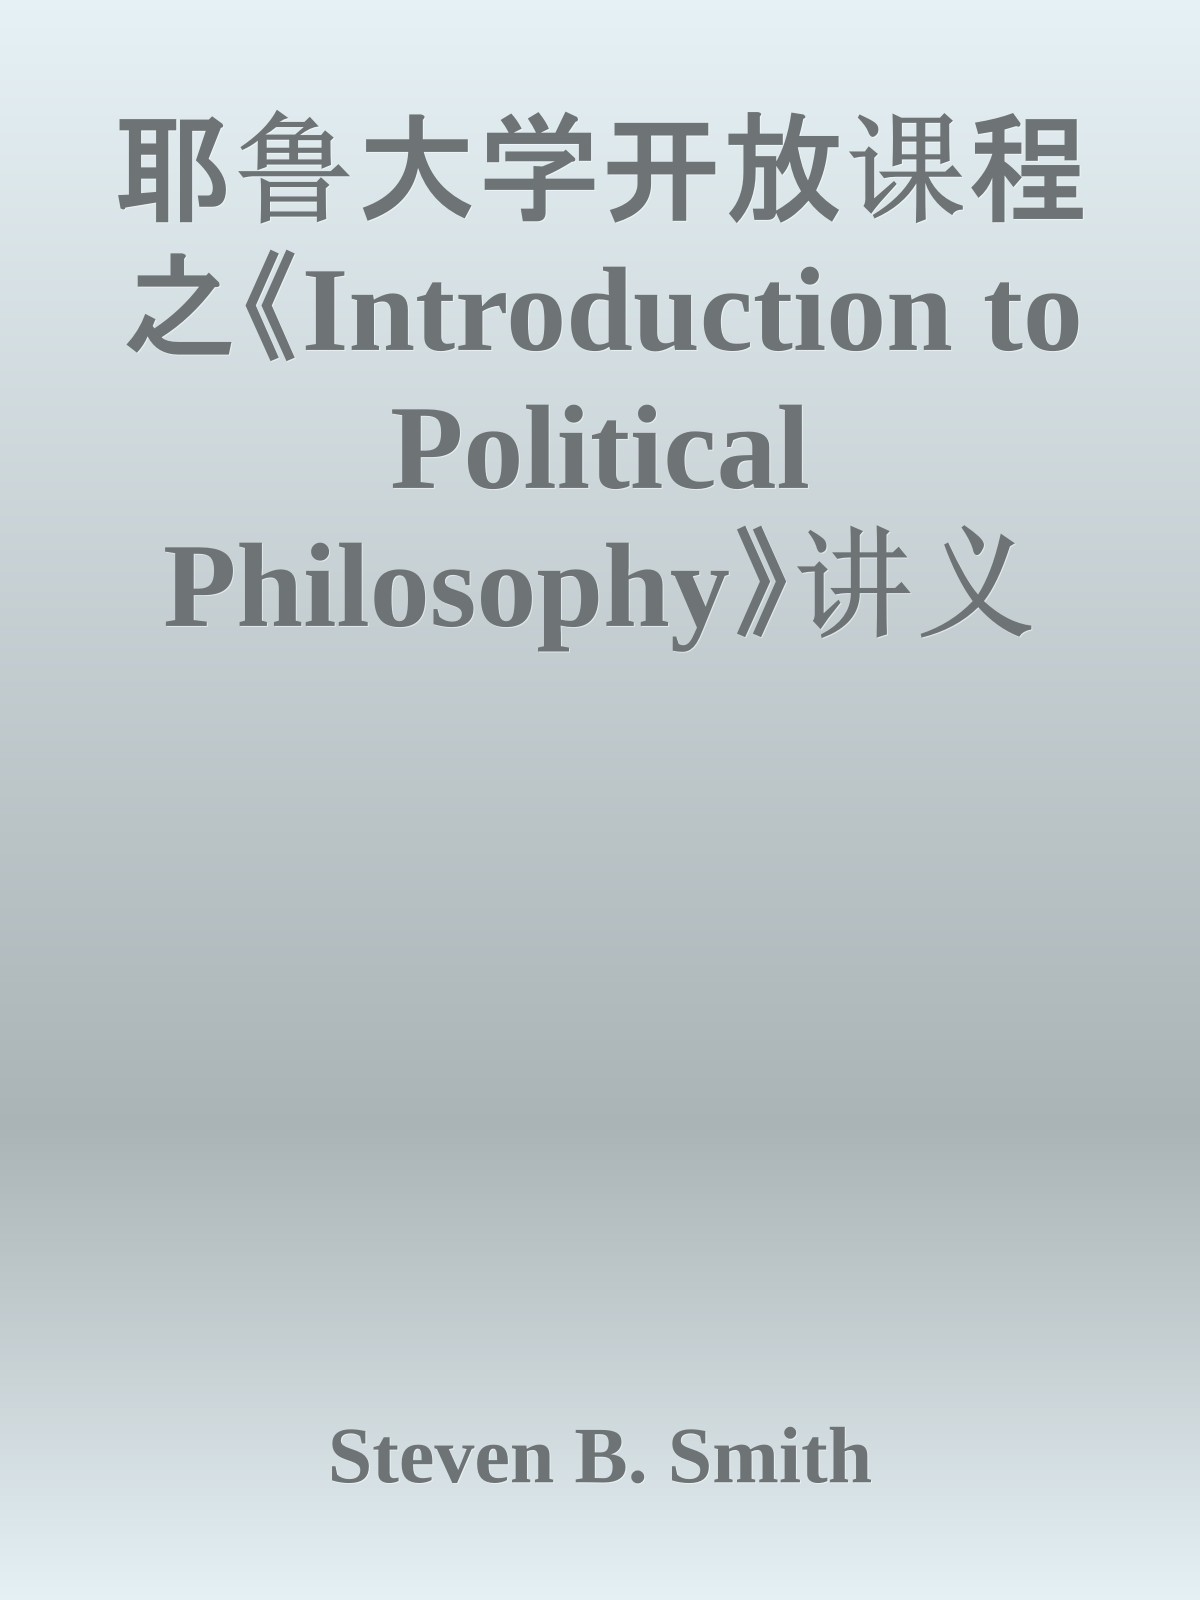 耶鲁大学开放课程之《Introduction to Political Philosophy》讲义